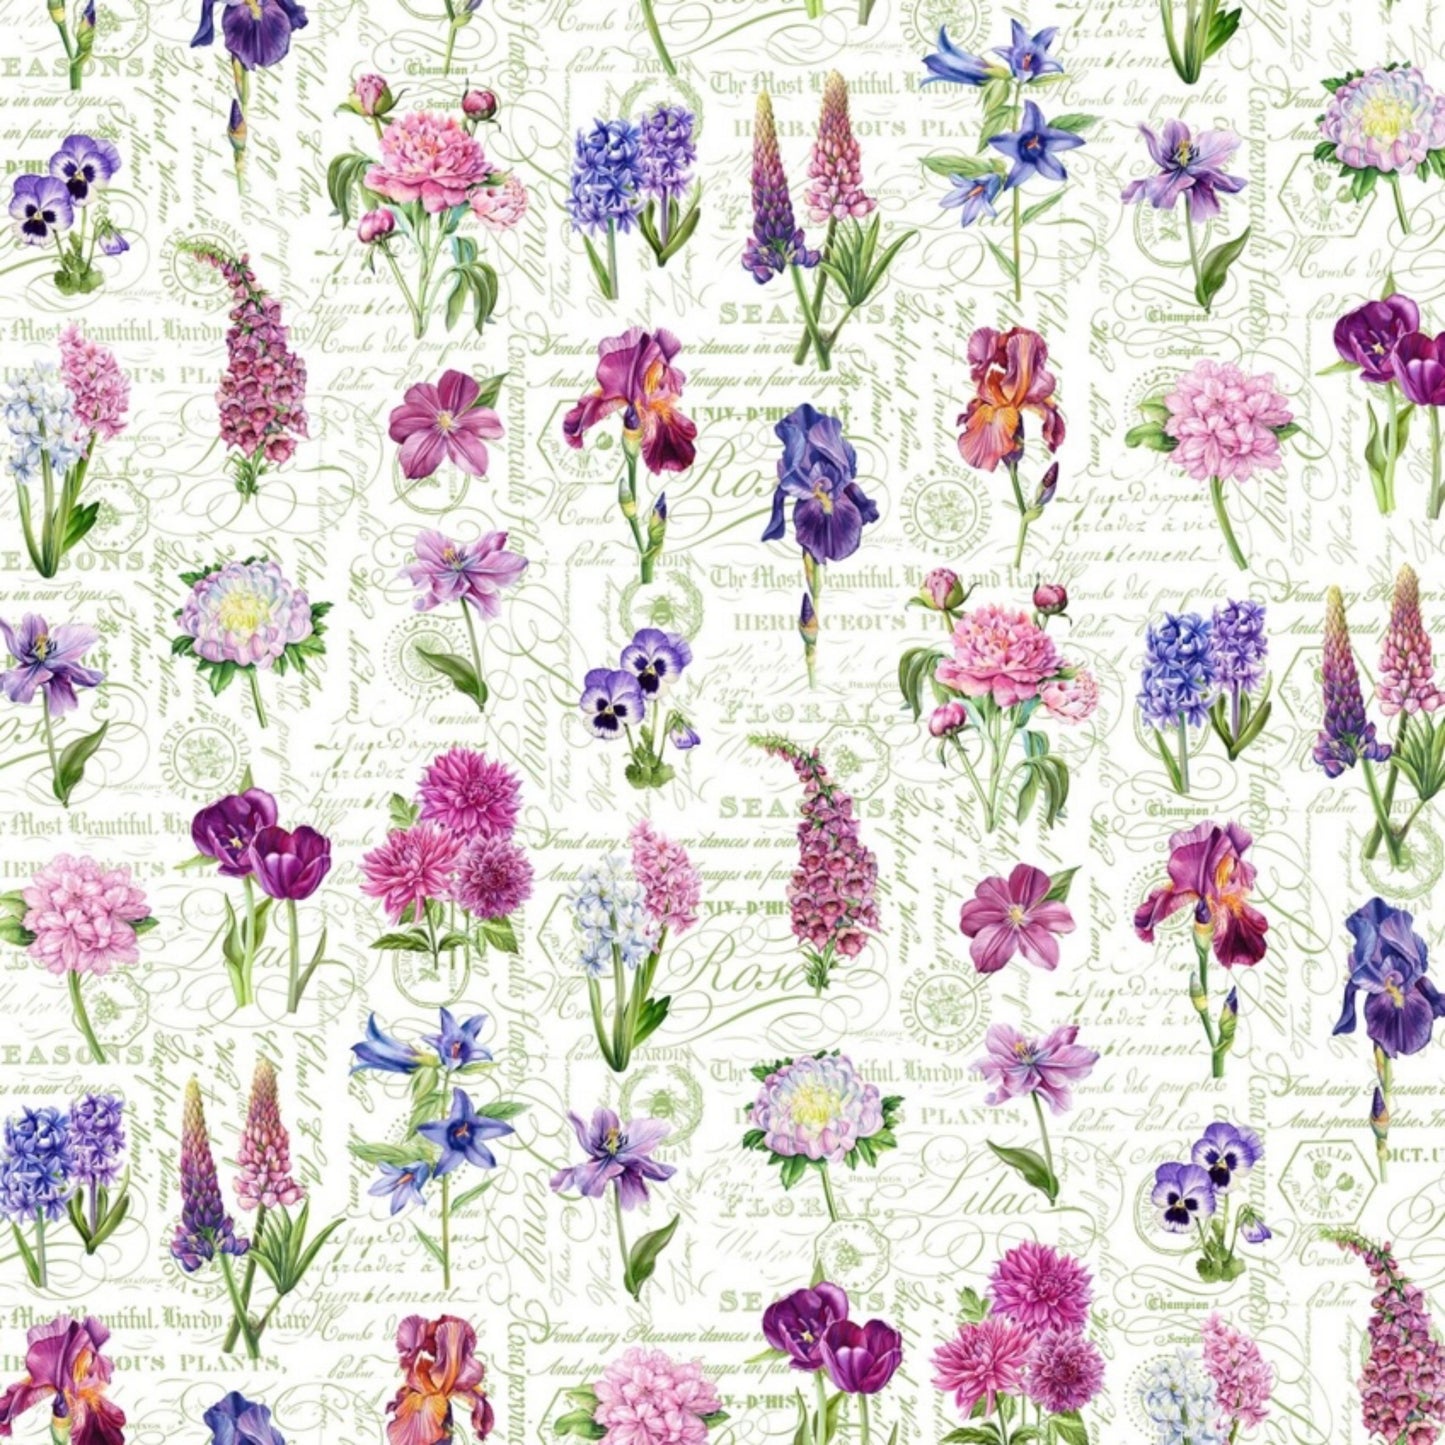 Flowers On Script - Deborah's Garden Collection by Michel Design Works for Northcott Fabrics